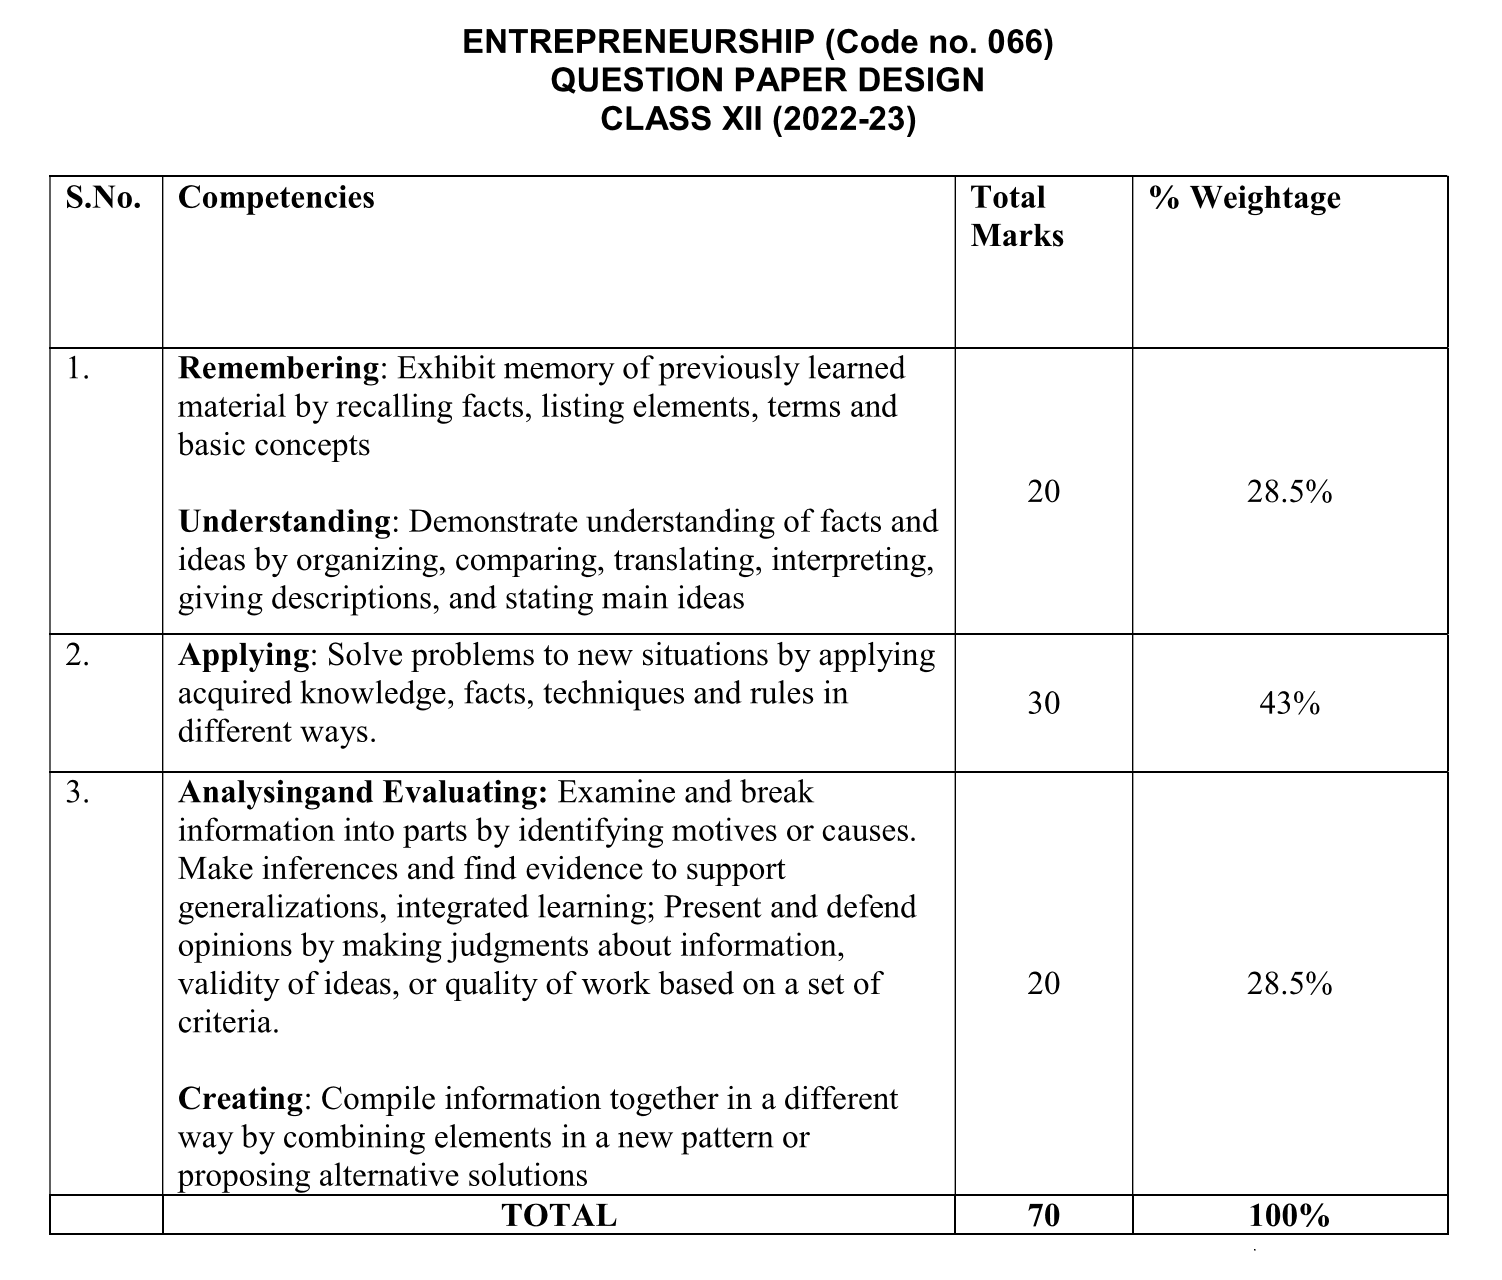 CBSE Class 12 Entrepreneurship Question Paper Design 2022-23